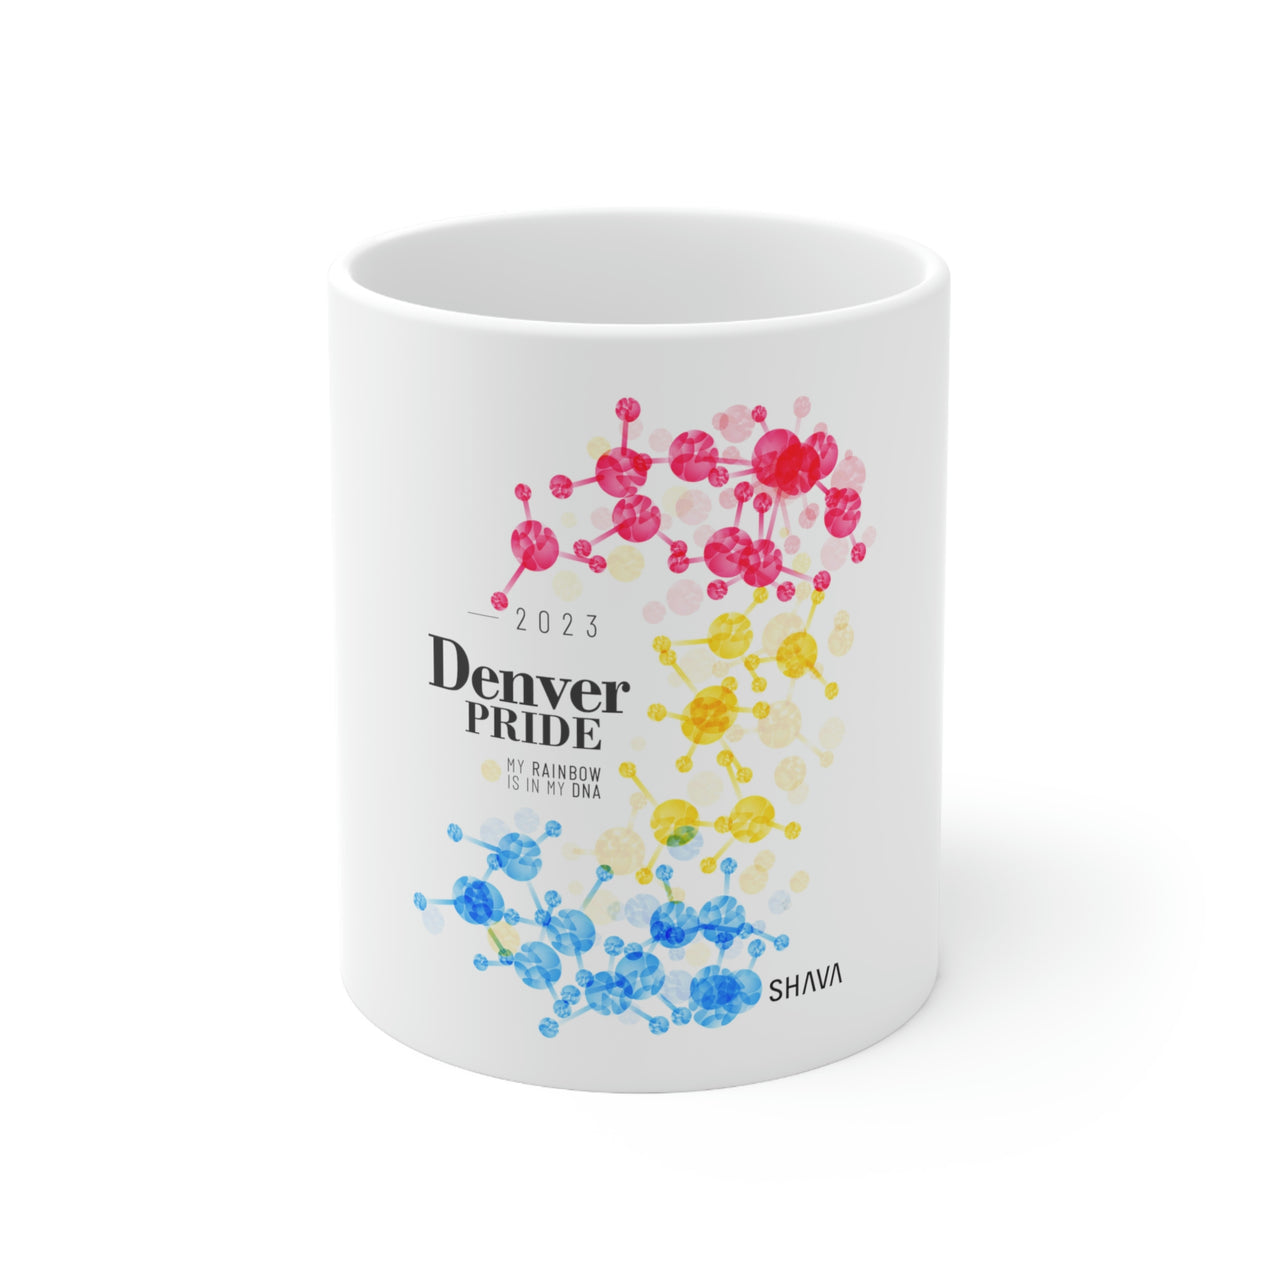 Pansexual Flag Ceramic Mug Denver Pride - Rainbow Is In My DNA SHAVA CO